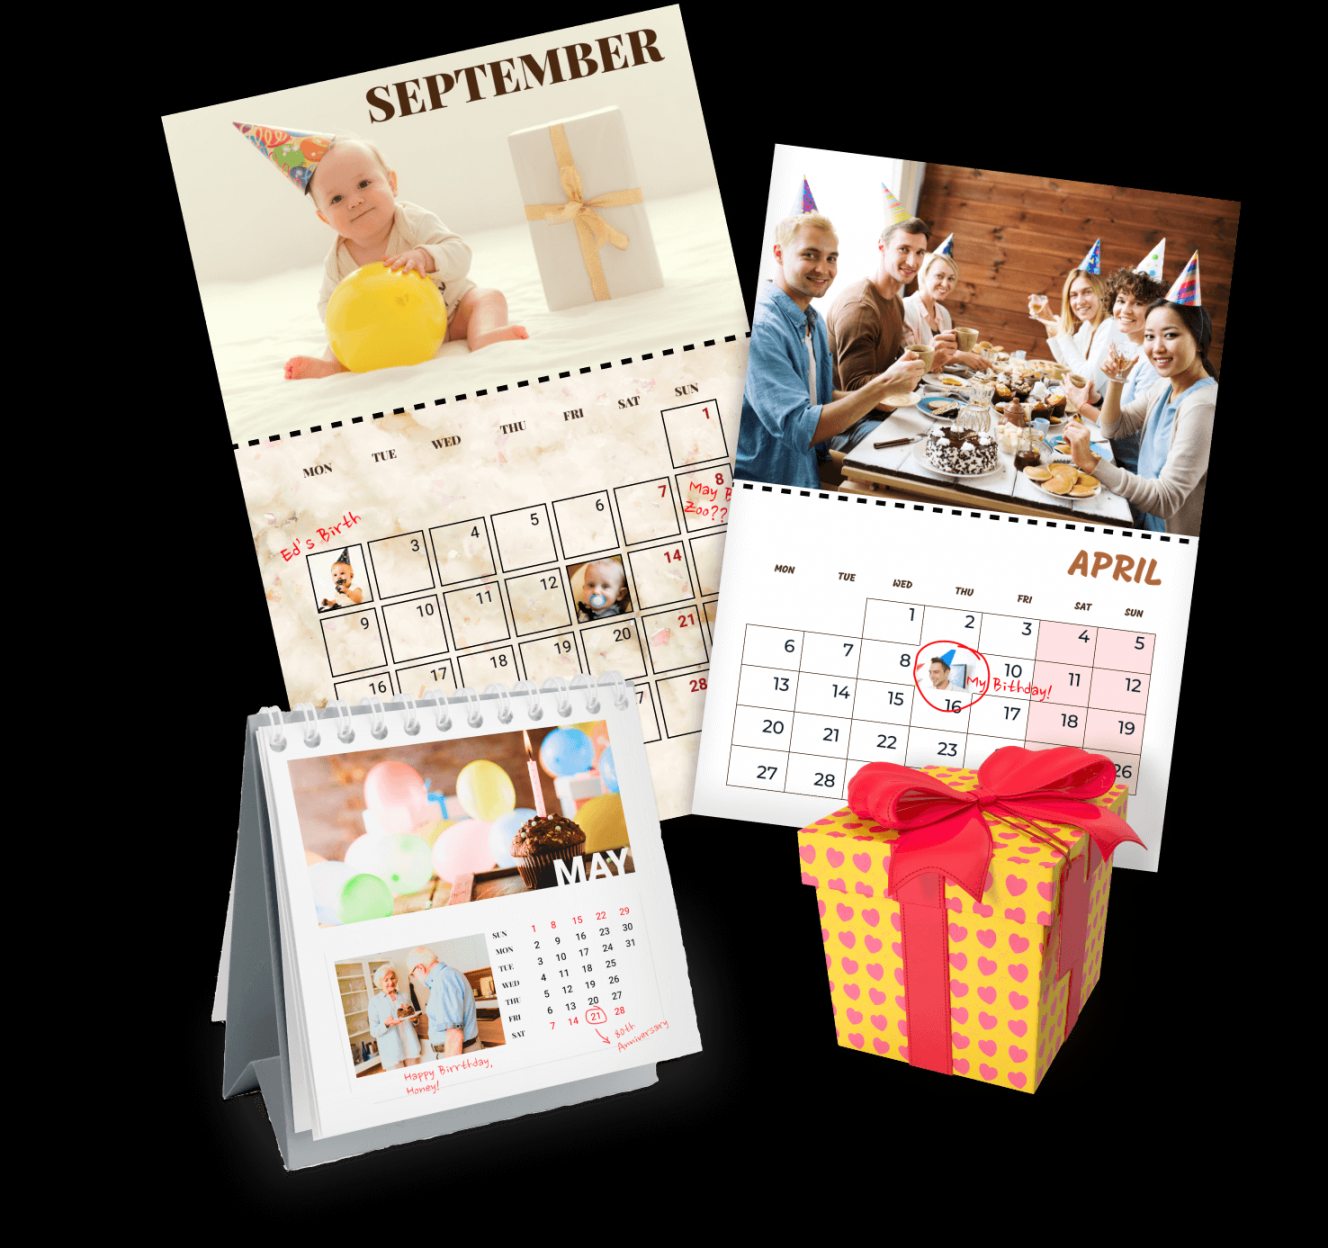 How to Make a Birthday Calendar  DIY Ideas & How-To